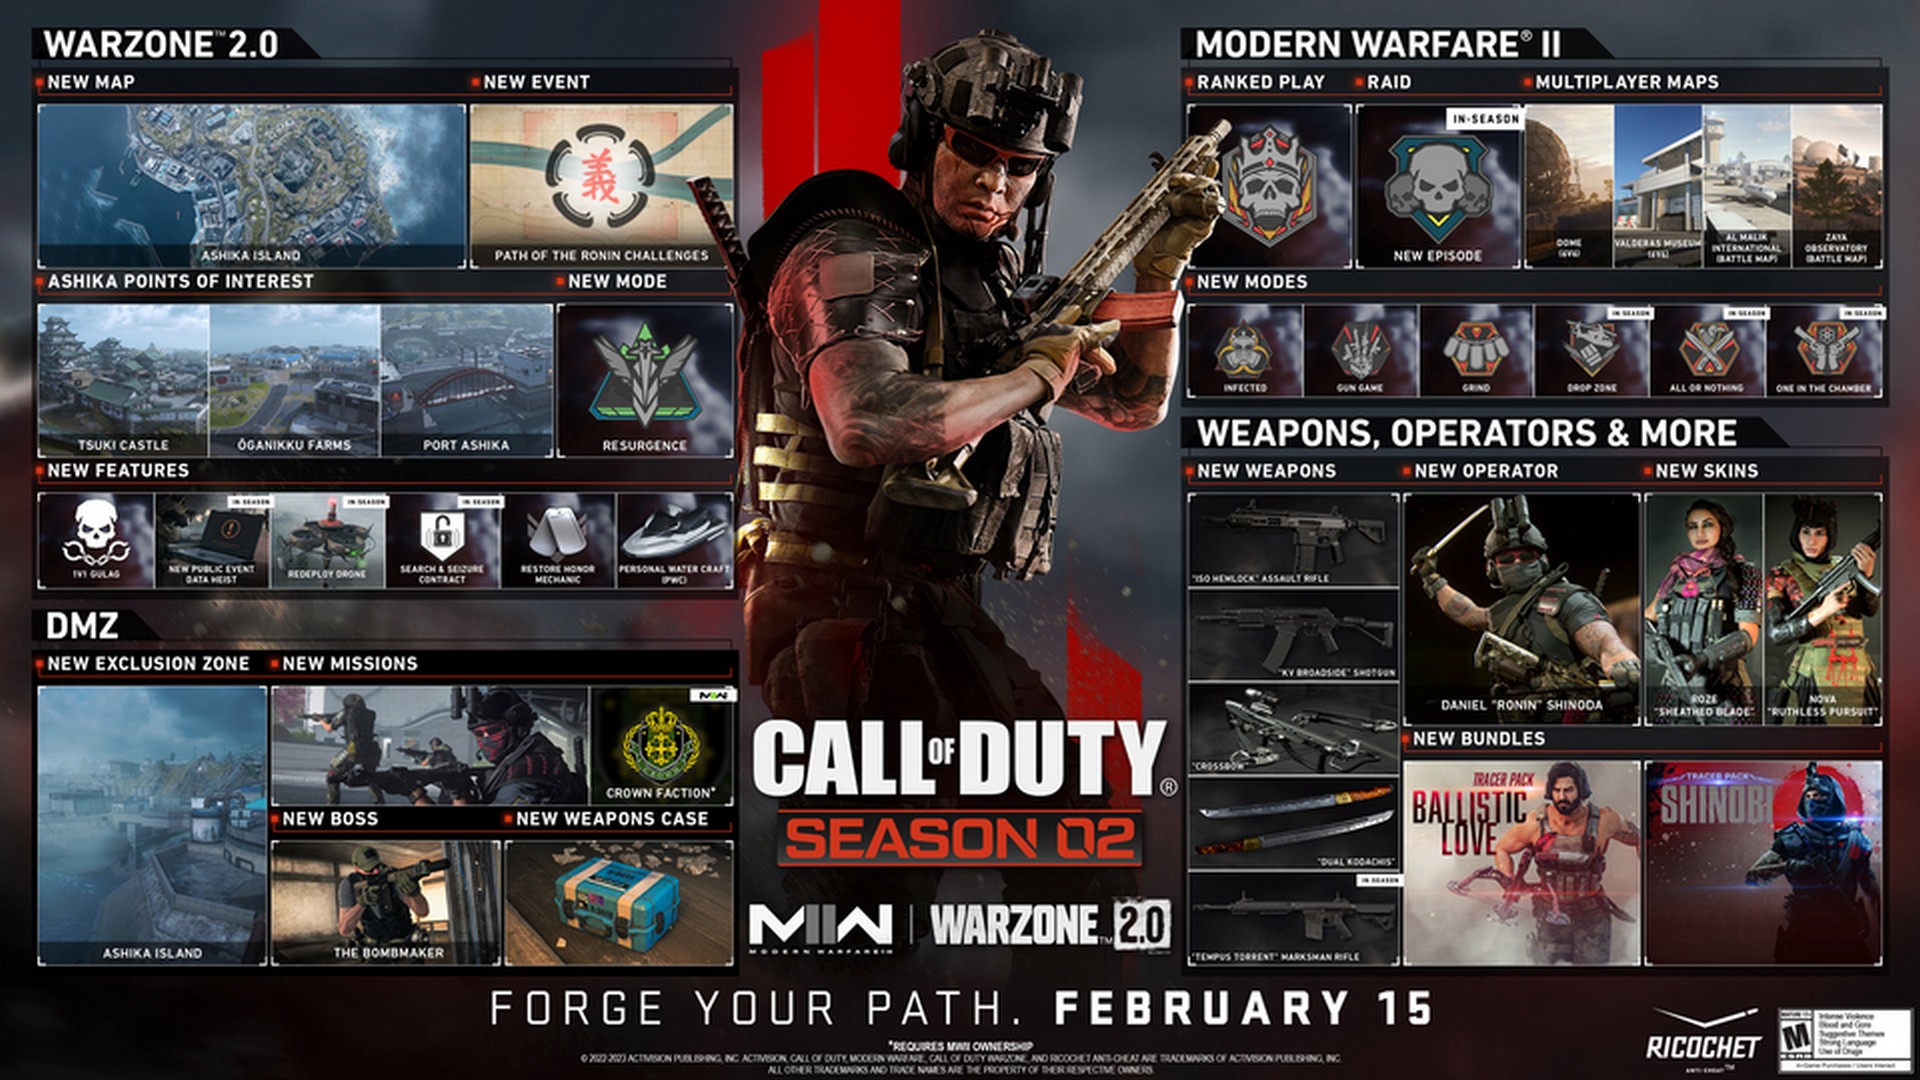 Call of Duty: Modern Warfare II & Warzone 2.0 Season 02 Is Coming 16th February